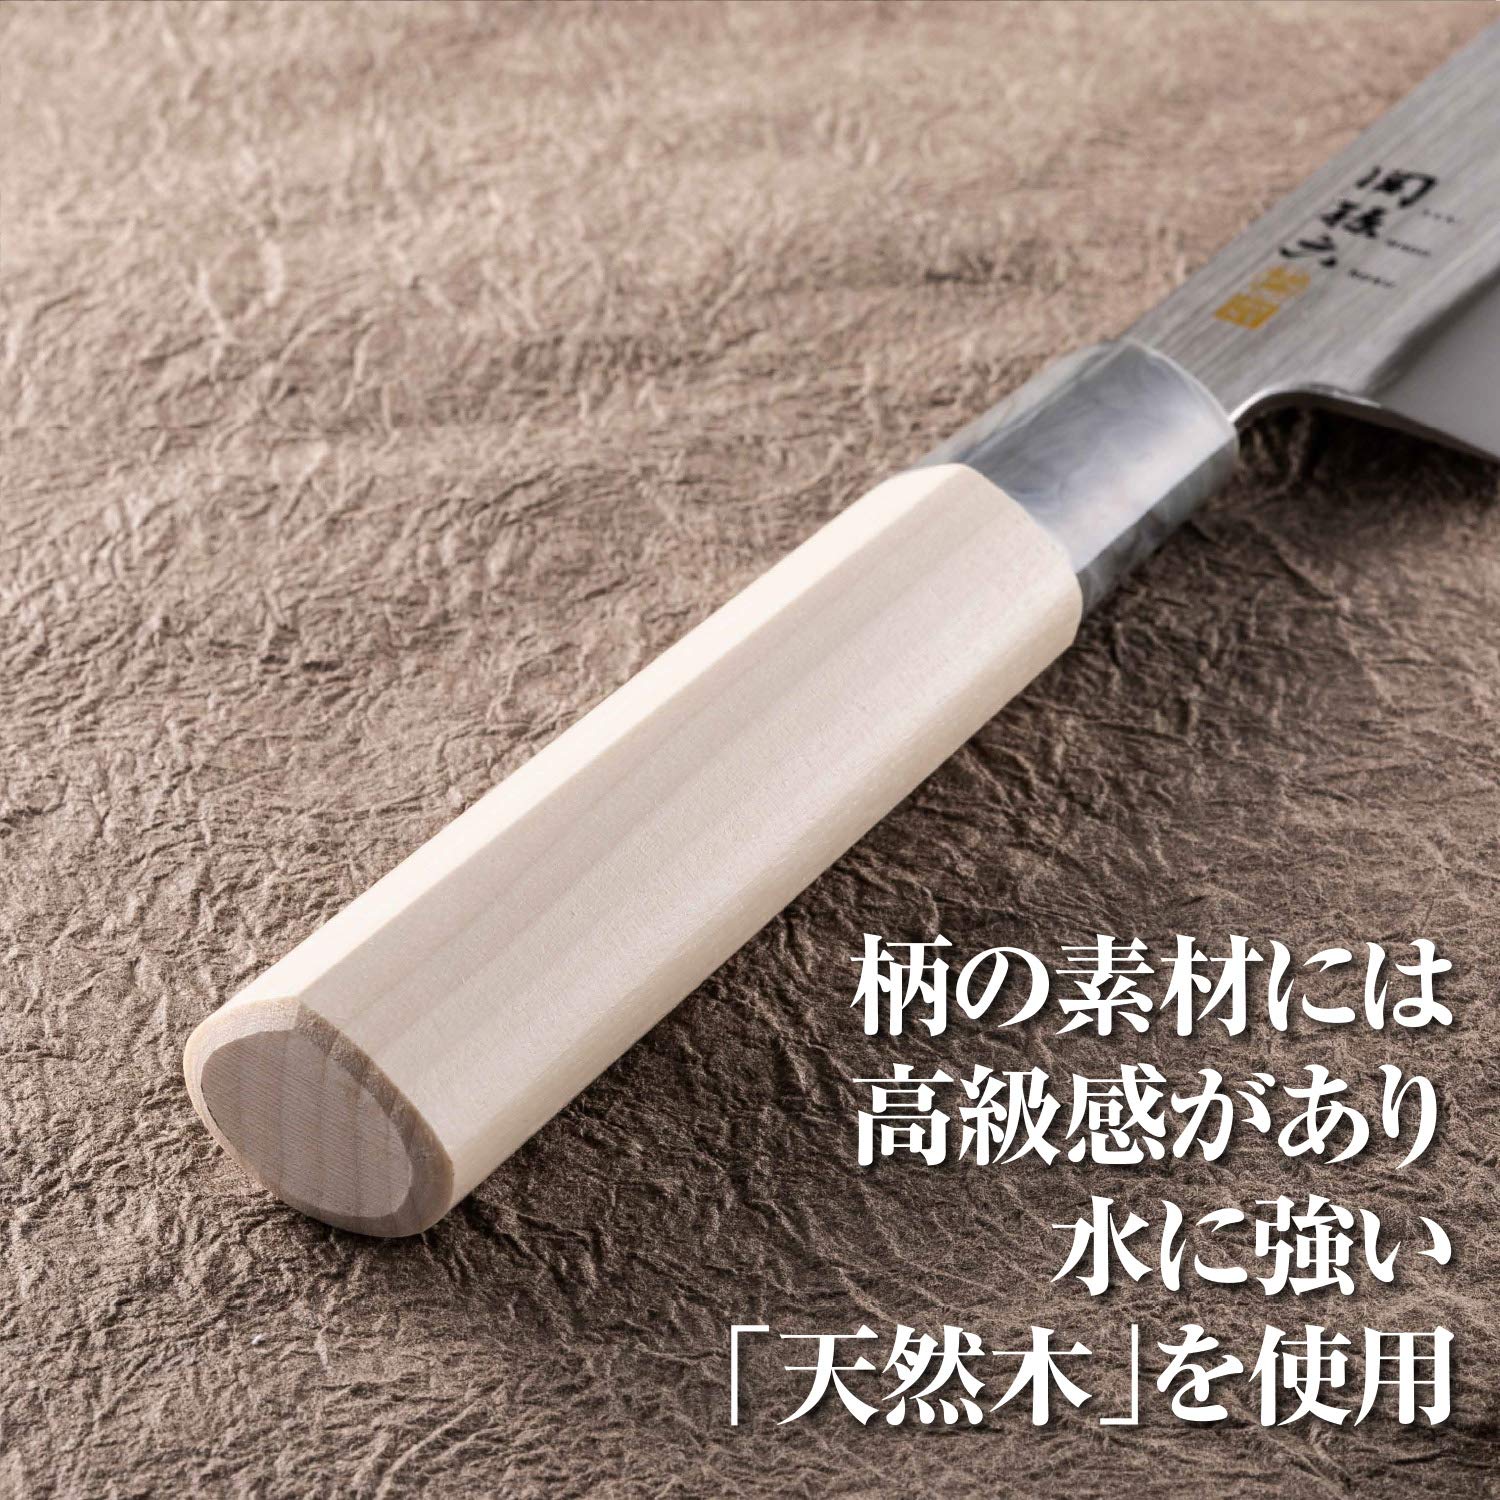 KAI SEKI MAGOROKU GINJU AK5070 Nakiri Thin blade Knife 165mm 6.5